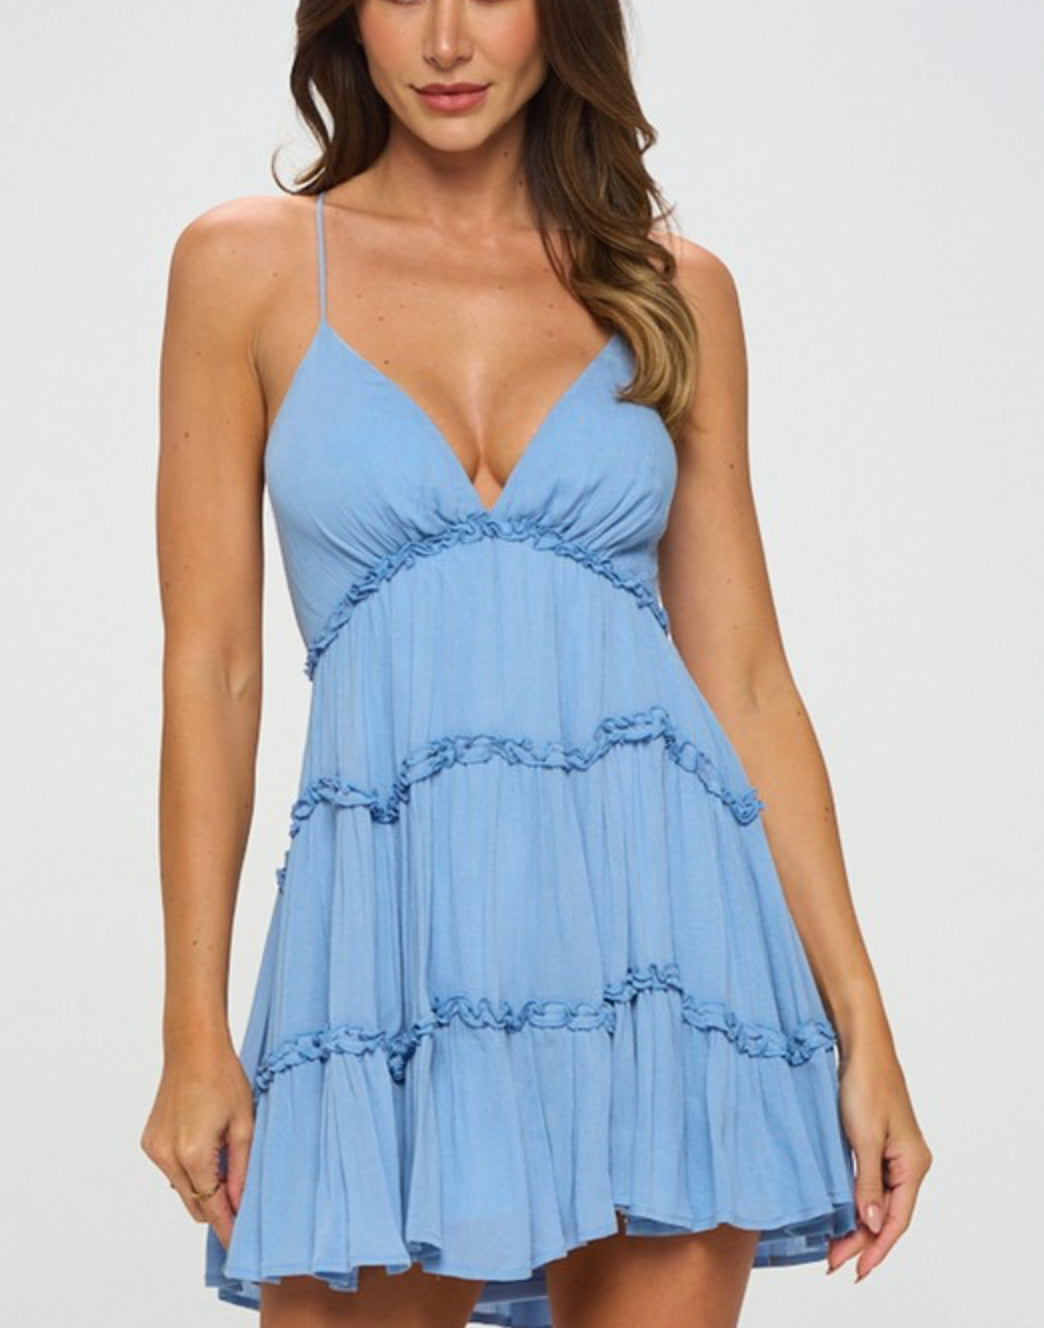 Syms blue dress